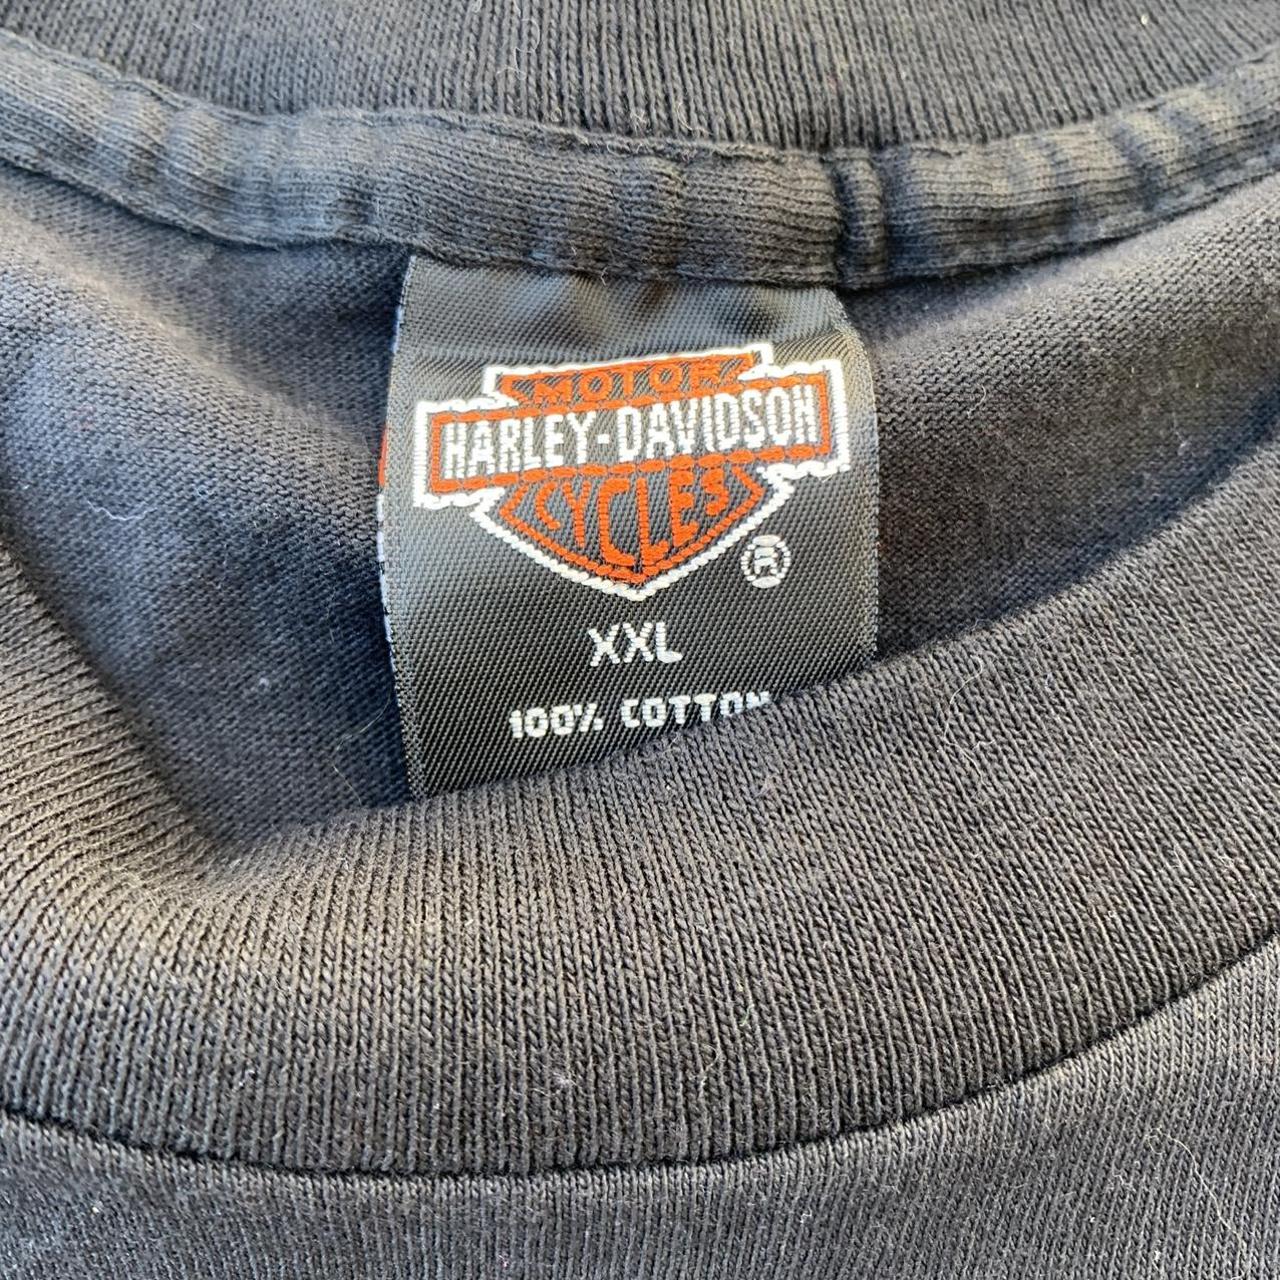 Vintage single stitch Harley Davidson t shirt size... - Depop